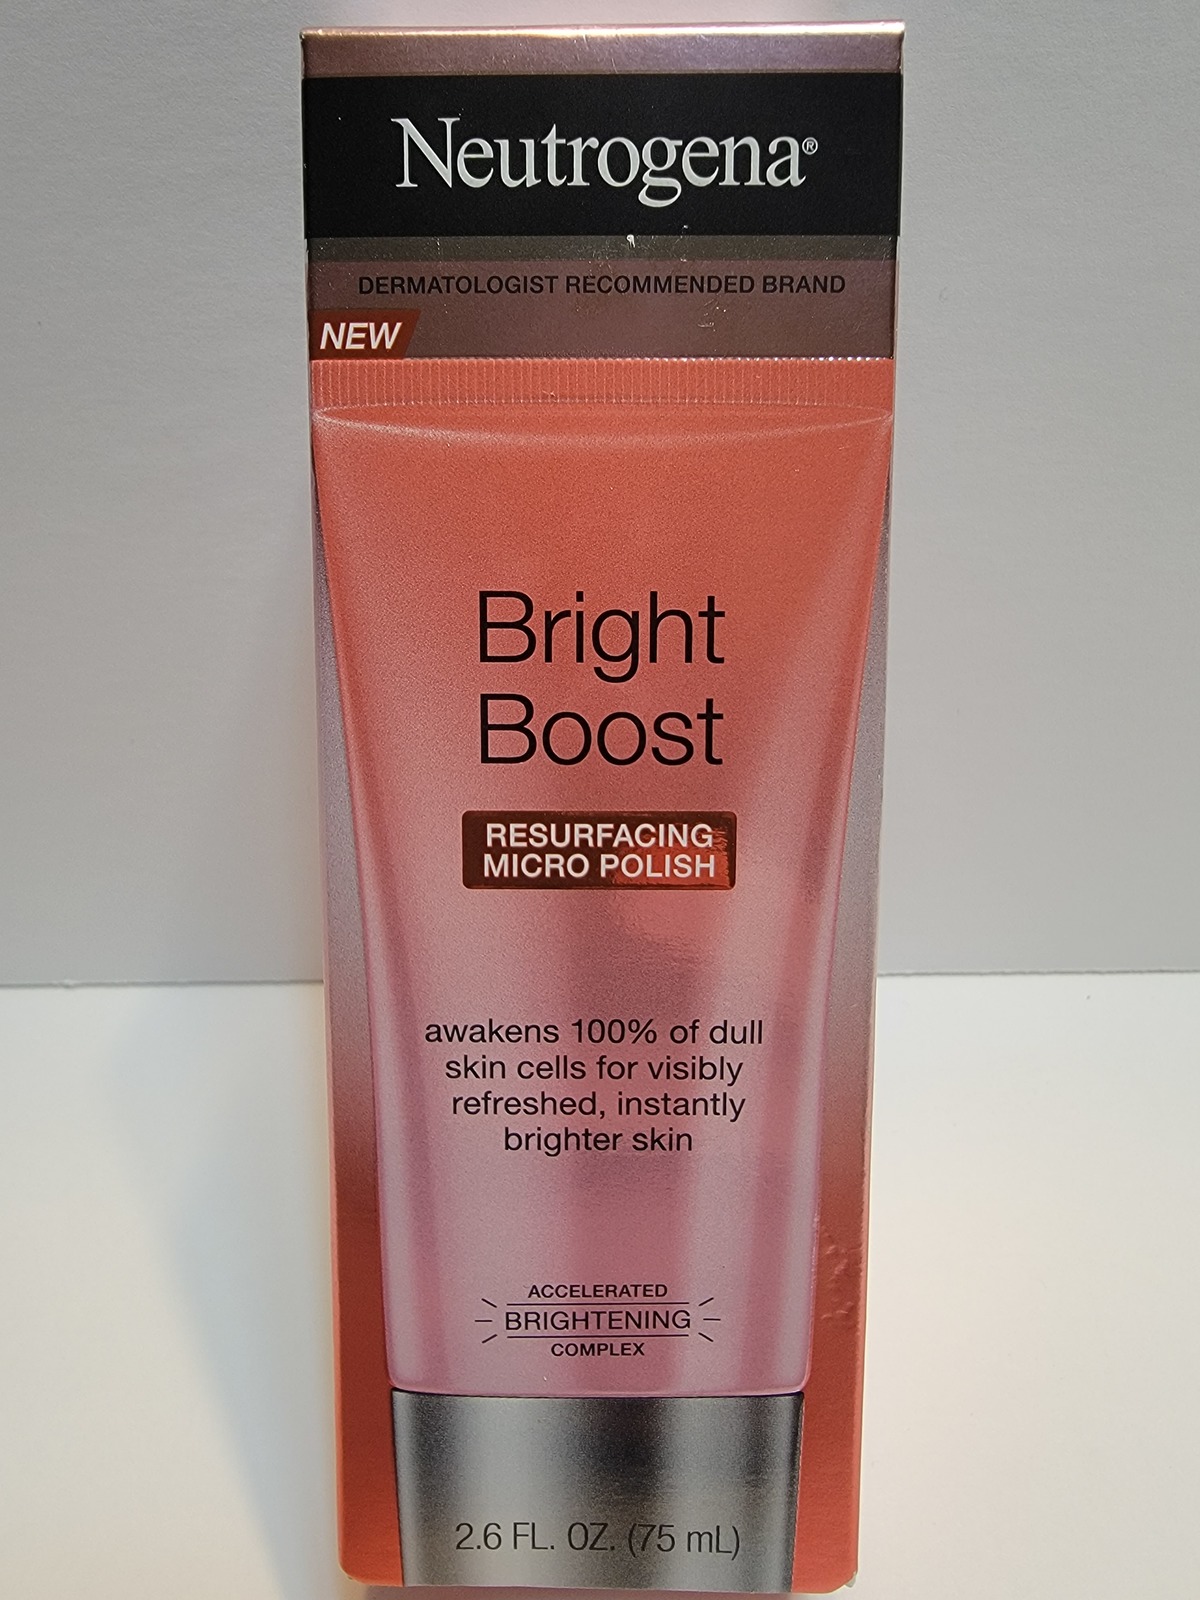 New Neutrogena Bright Boost Resurfacing Micro Polish Skin Care 2.6 Oz NIB - $10.00